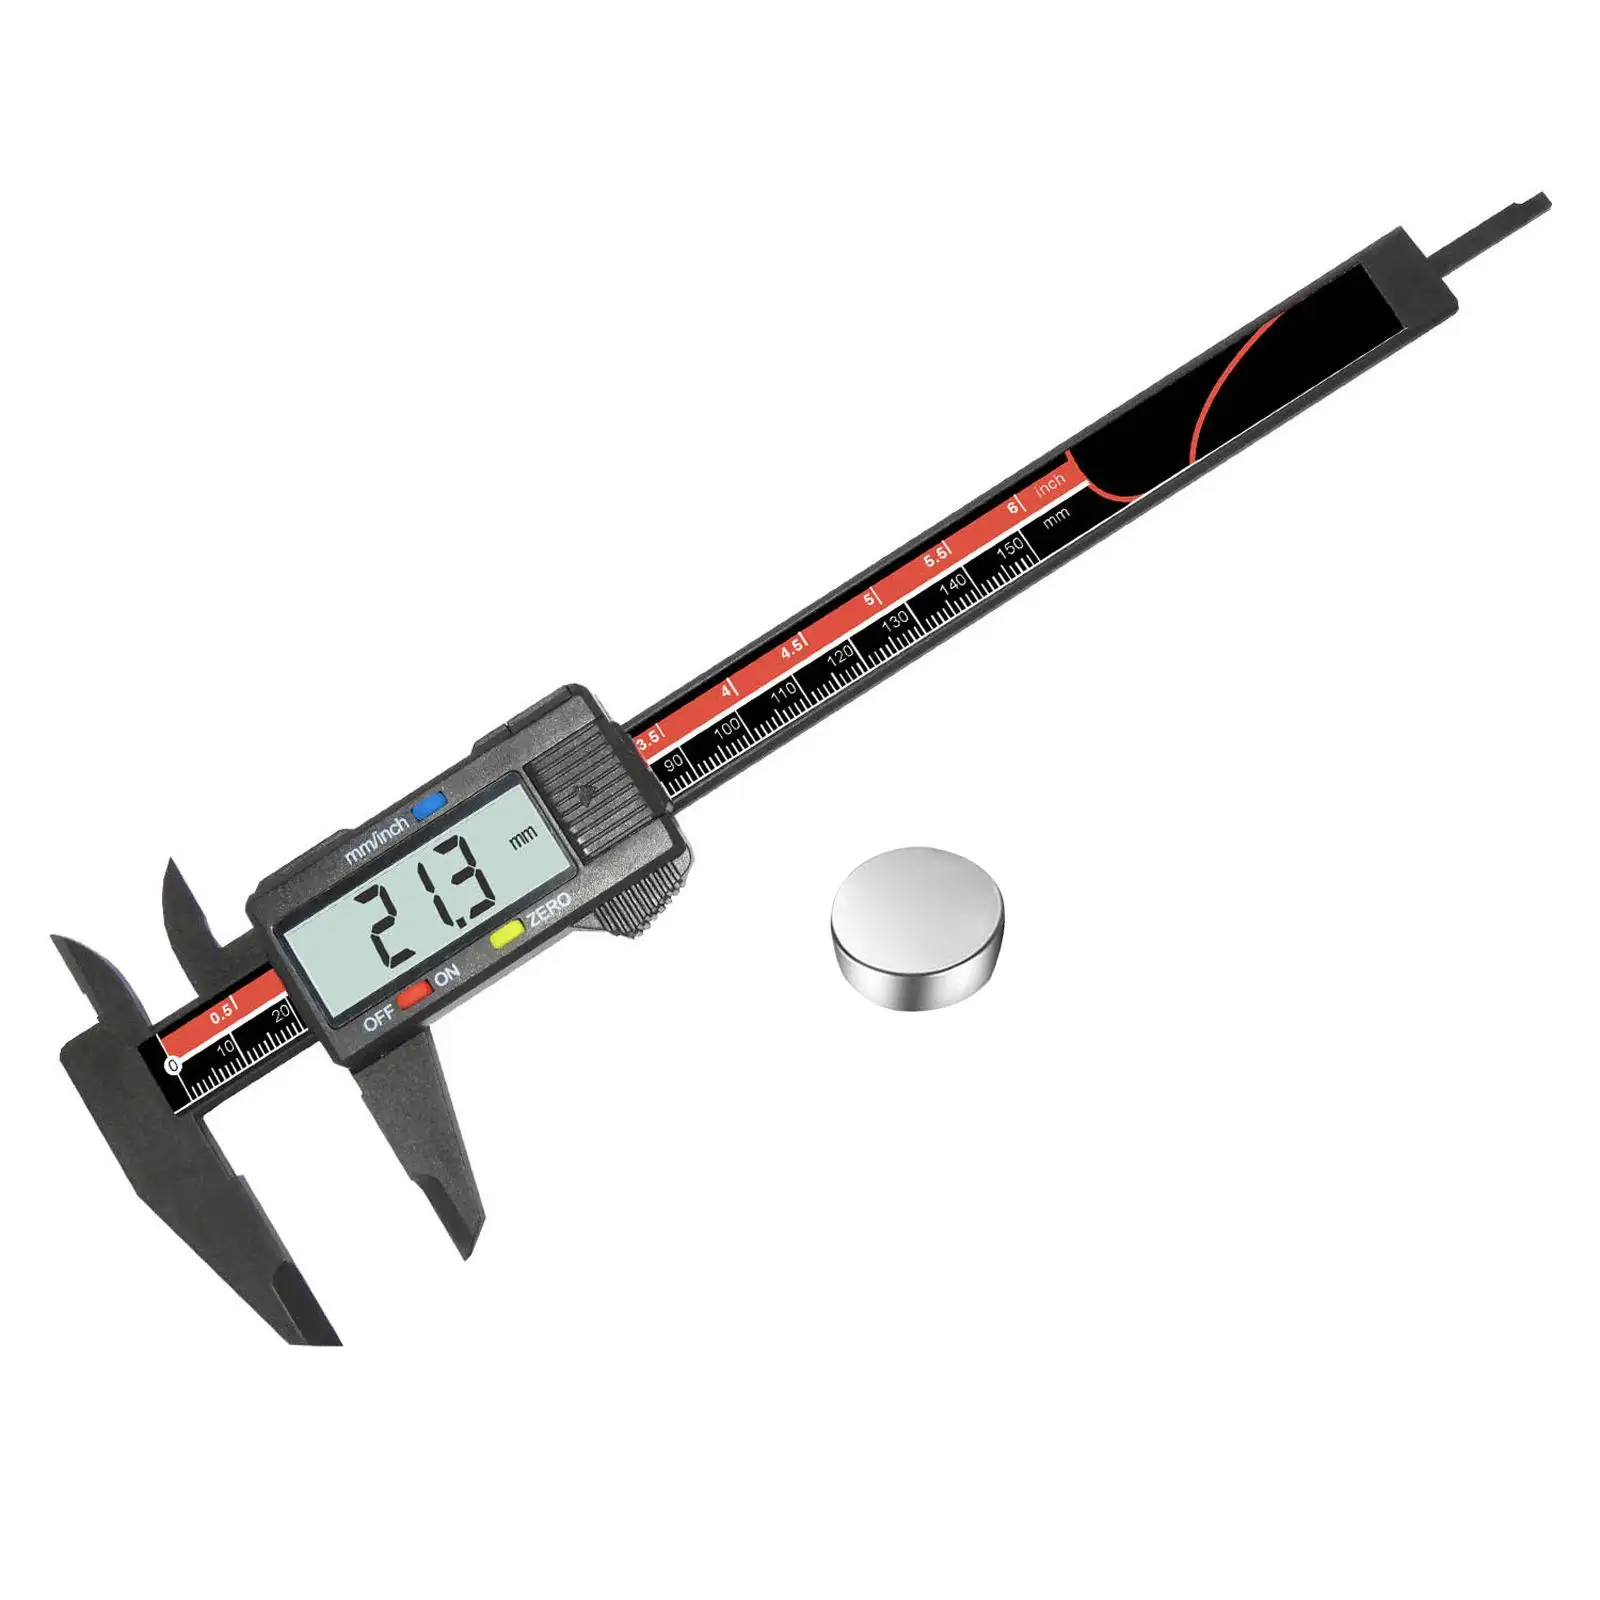 Gauge Vernier Caliper Depth Gauge Measuring Tools Metal Base Pachymeter for Woodwork